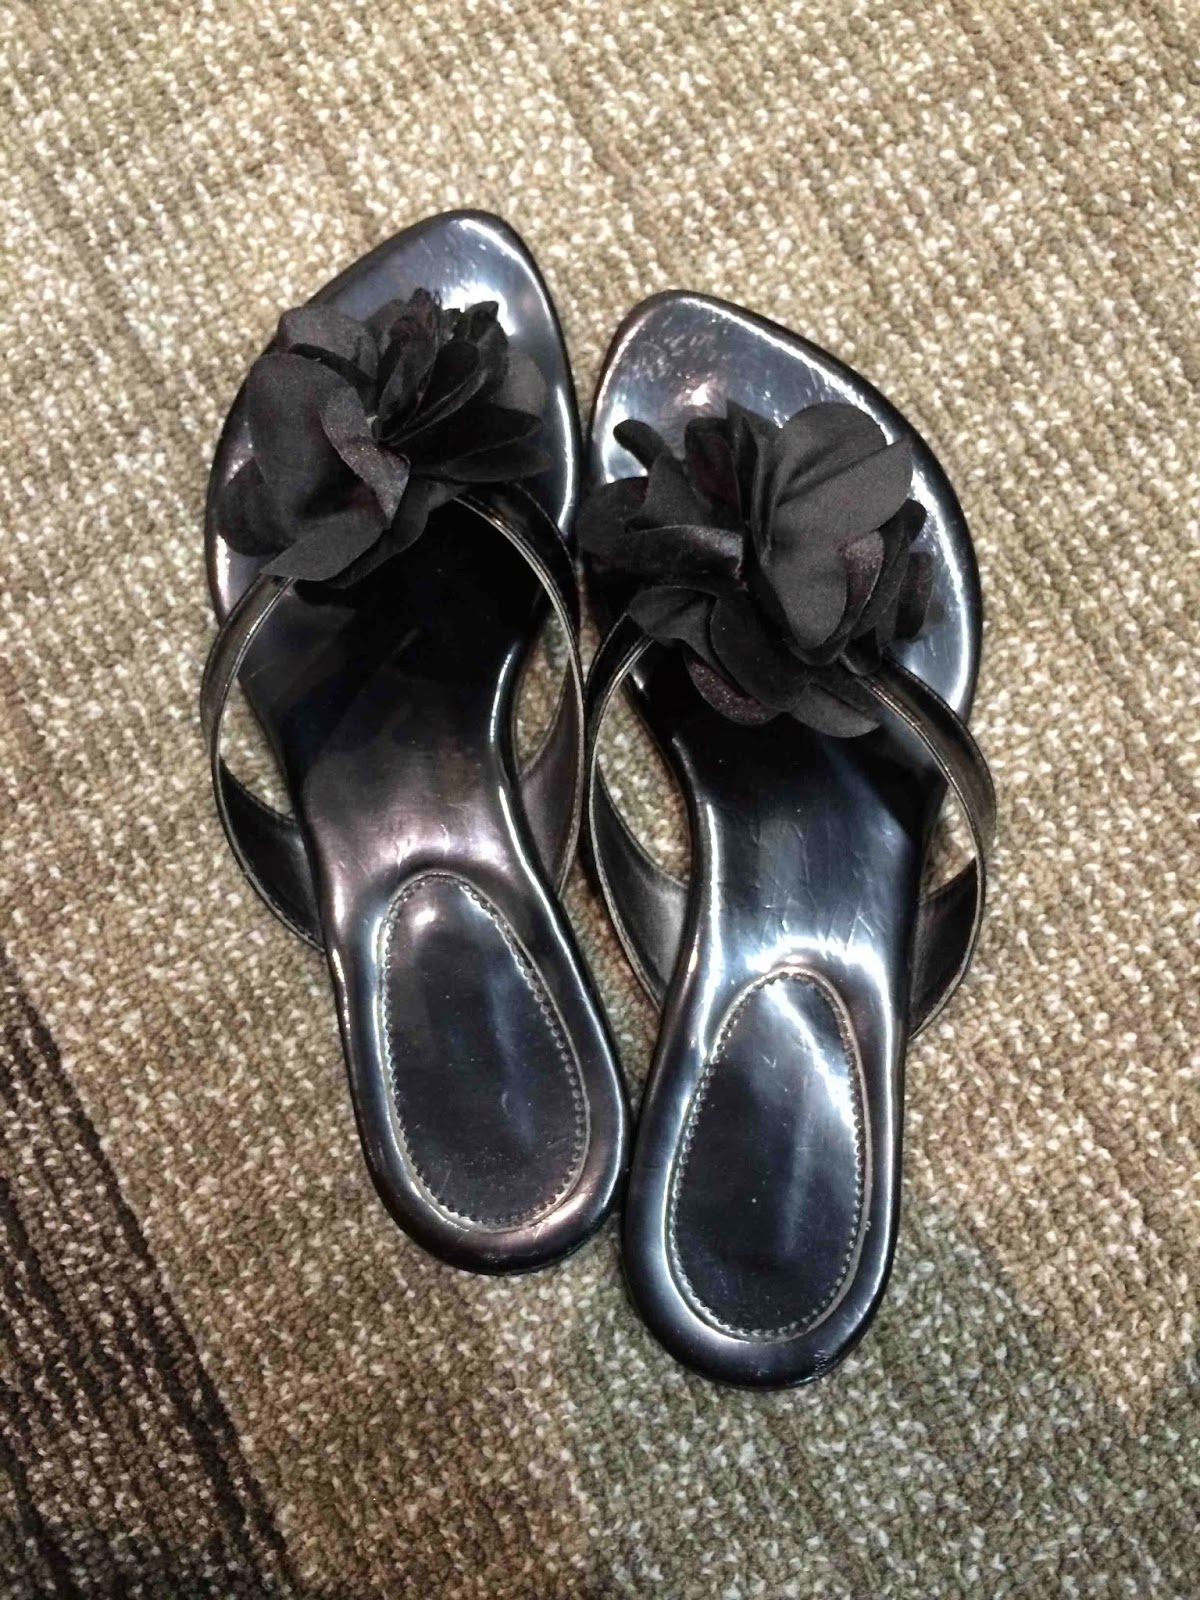 mf's mini world of mf-ism: My broken slippers